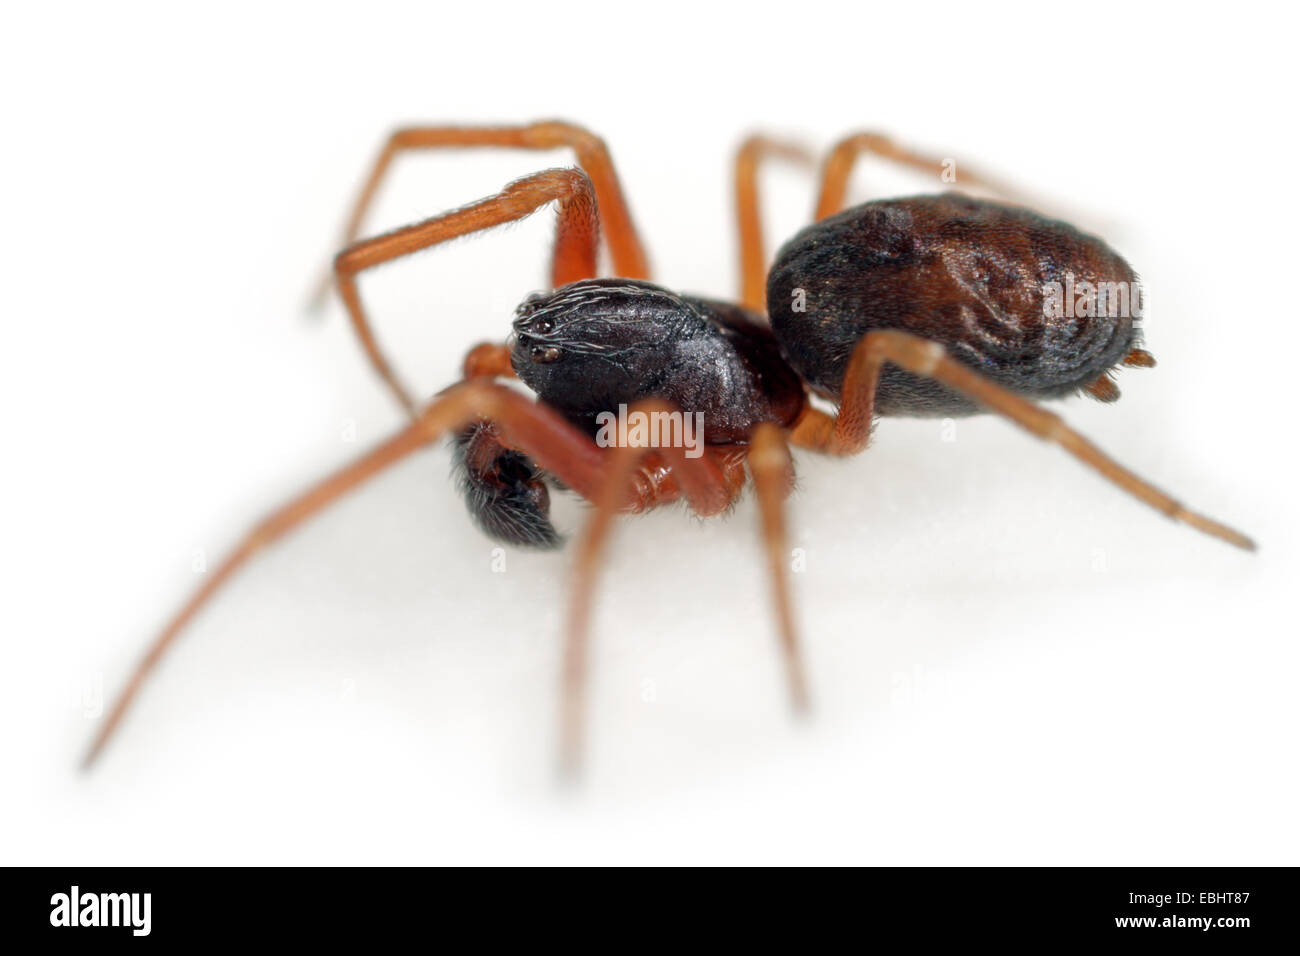 Homme Dictyna uncinata araignée sur fond blanc. Famille Dictynidae. Meshweb tisserands. Banque D'Images